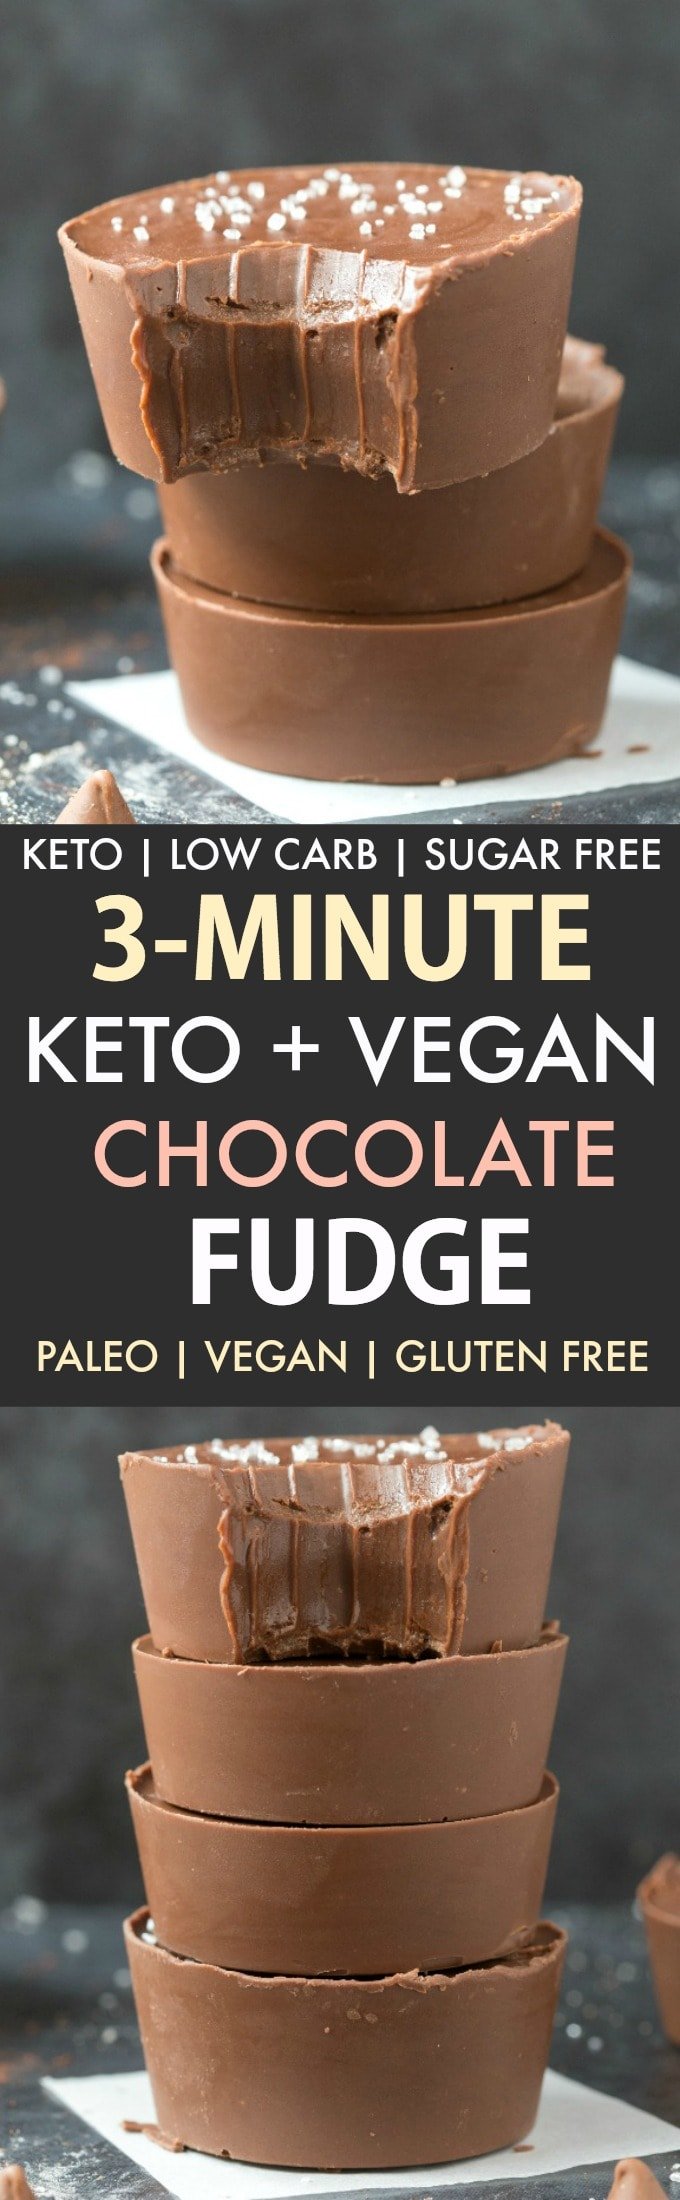 3-Minute Paleo Vegan Chocolate Fudge (Keto, Low Carb, Sugar Free)- An easy 3-ingredient recipe for smooth, creamy and fool-proof chocolate keto fat bomb fudge made with no dairy, no sugar, no condensed milk. #ketorecipe #fatbombs #dairyfree #paleo #vegan #keto | Recipe on thebigmansworld.com